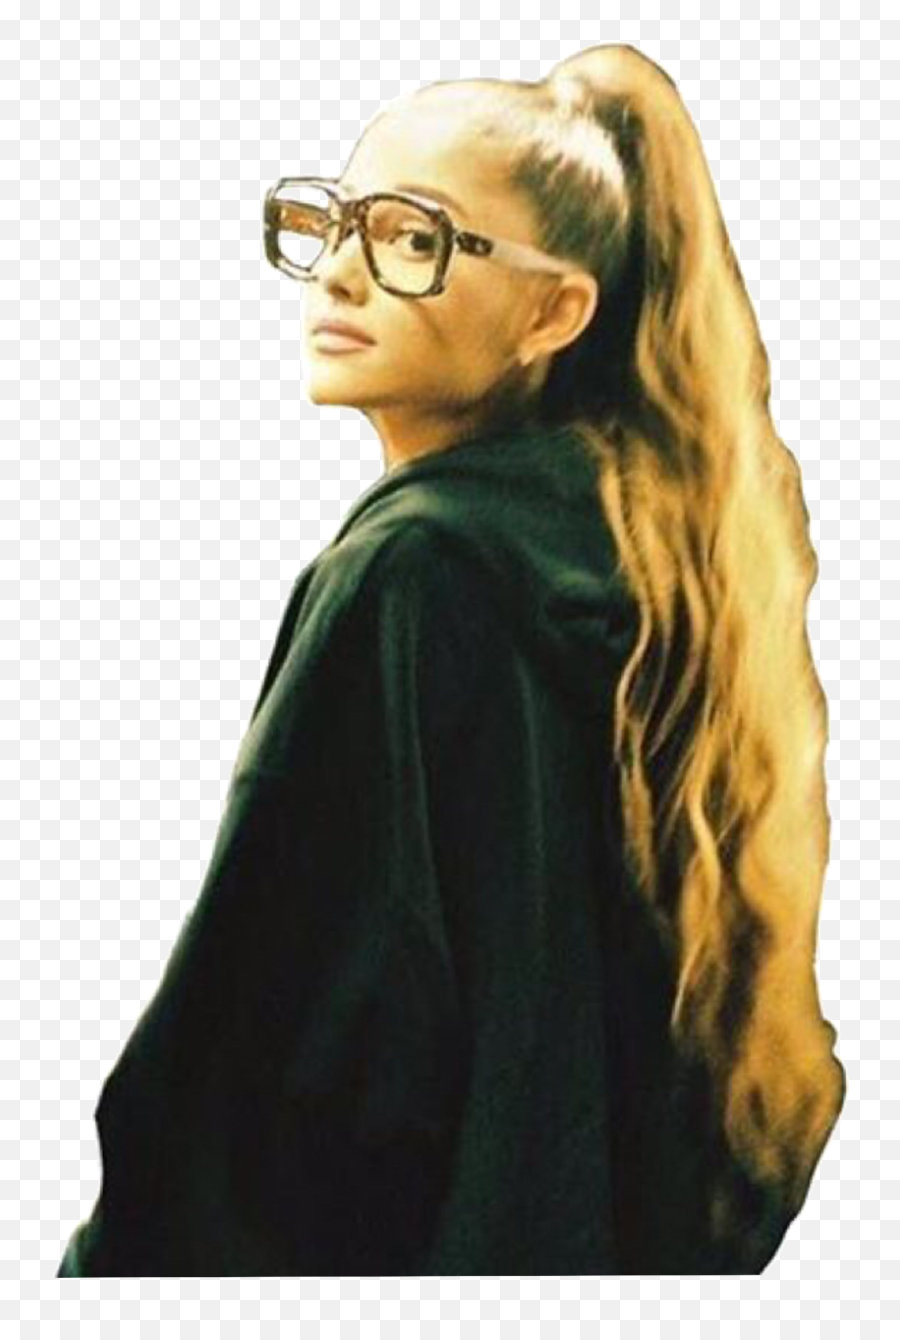 Ariana Grande Brown Ponytail Cute Nerd Glasses - Ariana Grande Transparent 2019 Emoji,Ariana Grande Emoji